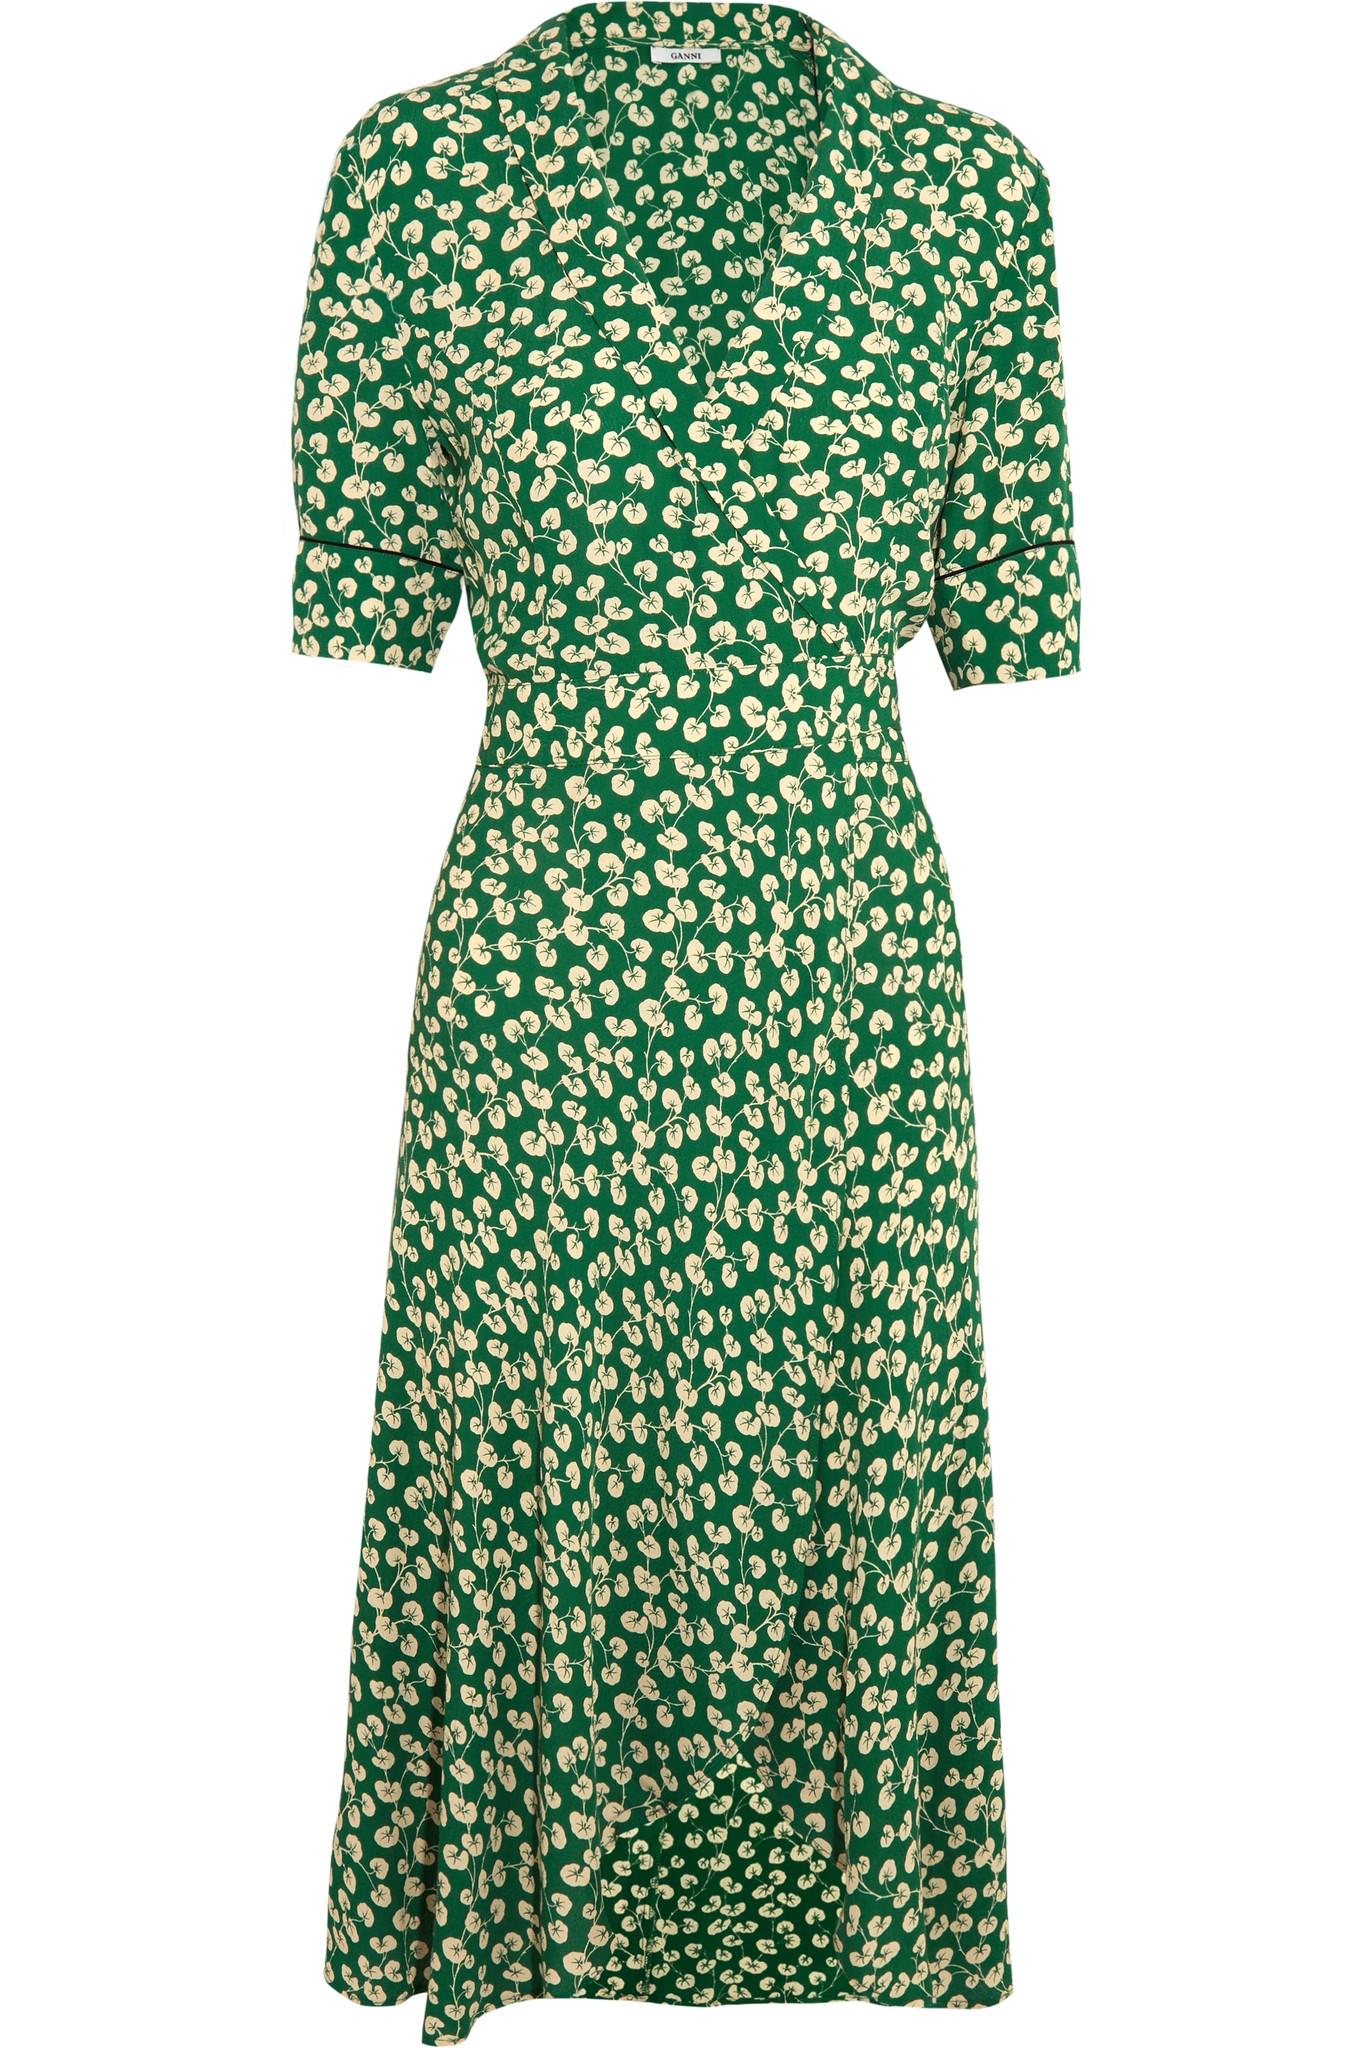 Ganni Dalton Floral-print Crepe Wrap Dress in Green | Lyst